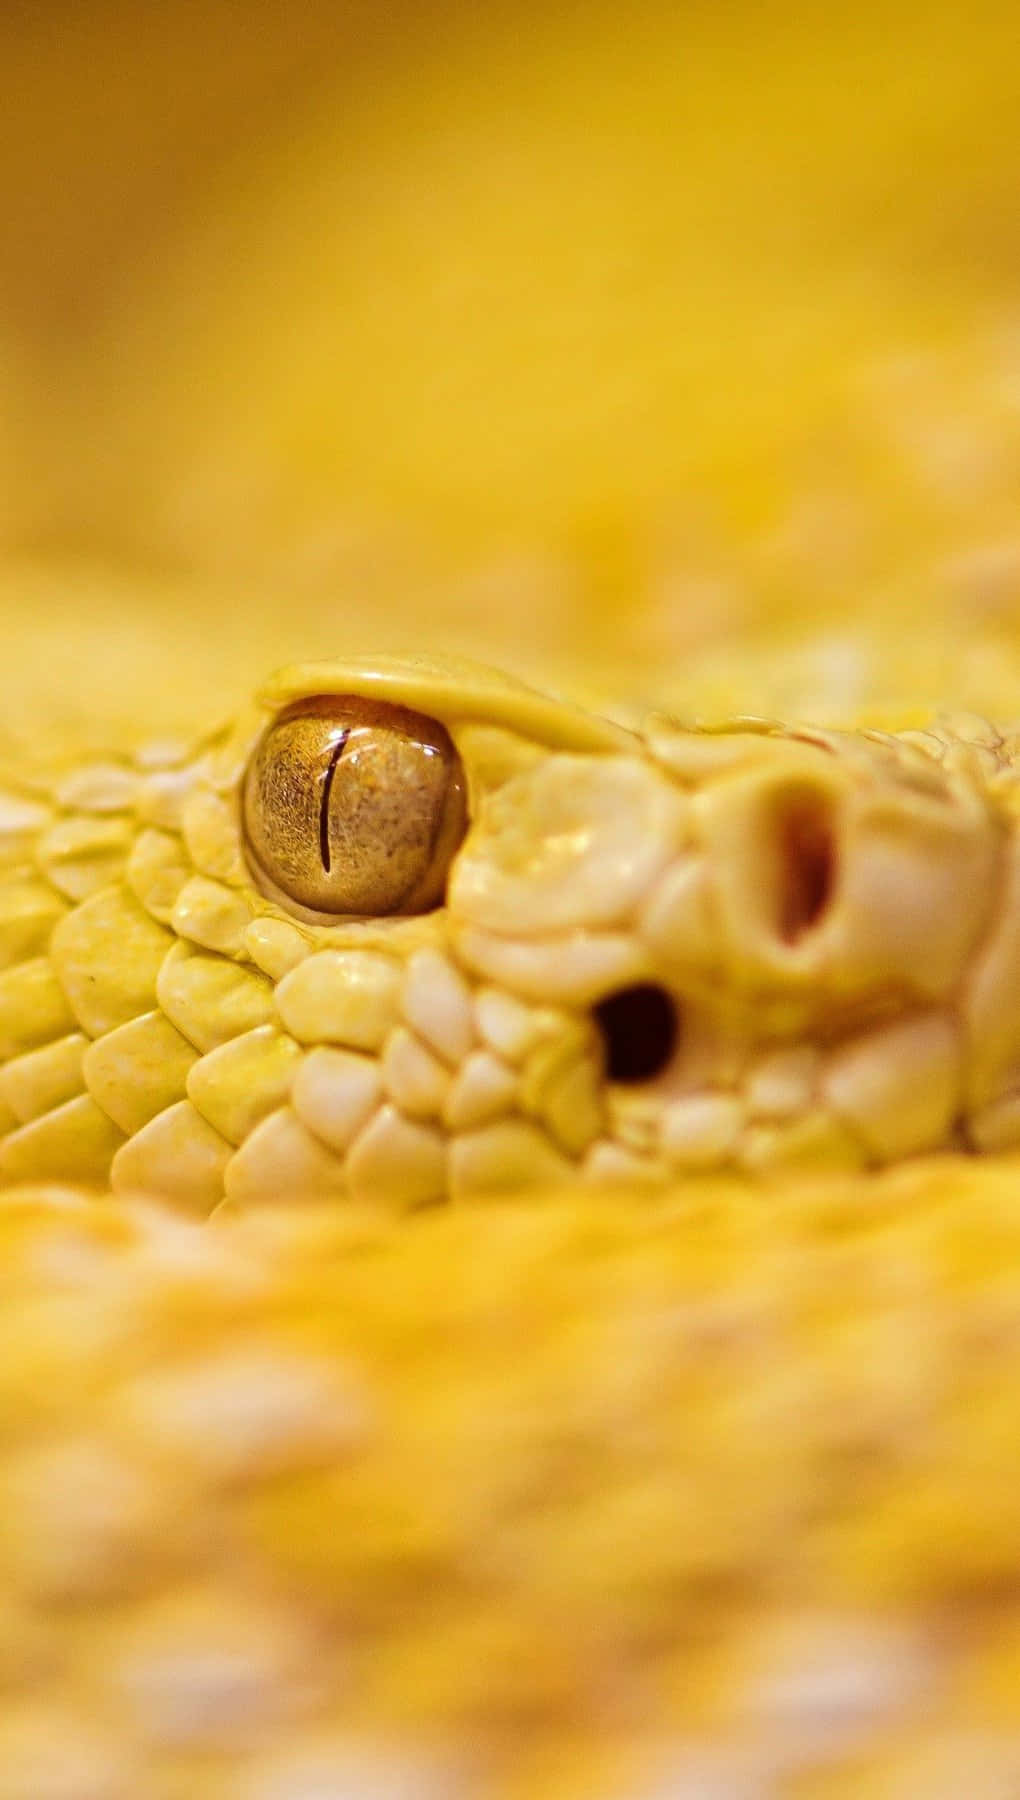 Stunning Yellow Snake in Natural Habitat Wallpaper